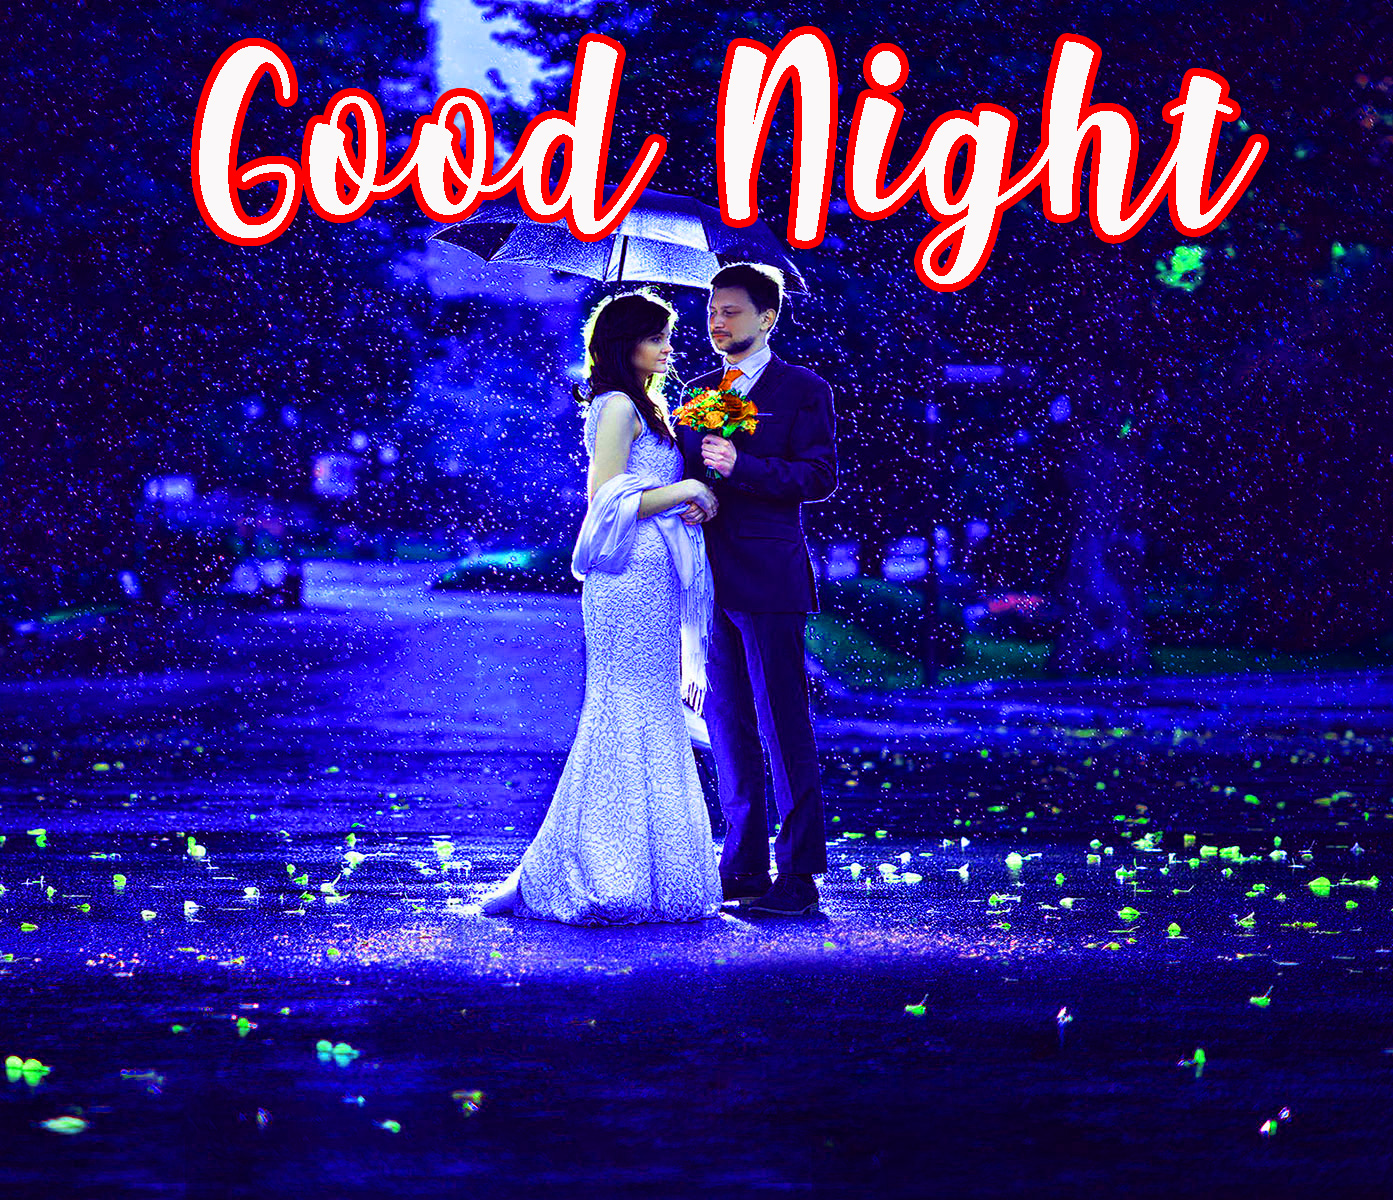 Good Night Image Download Romantic - 1393x1200 Wallpaper 